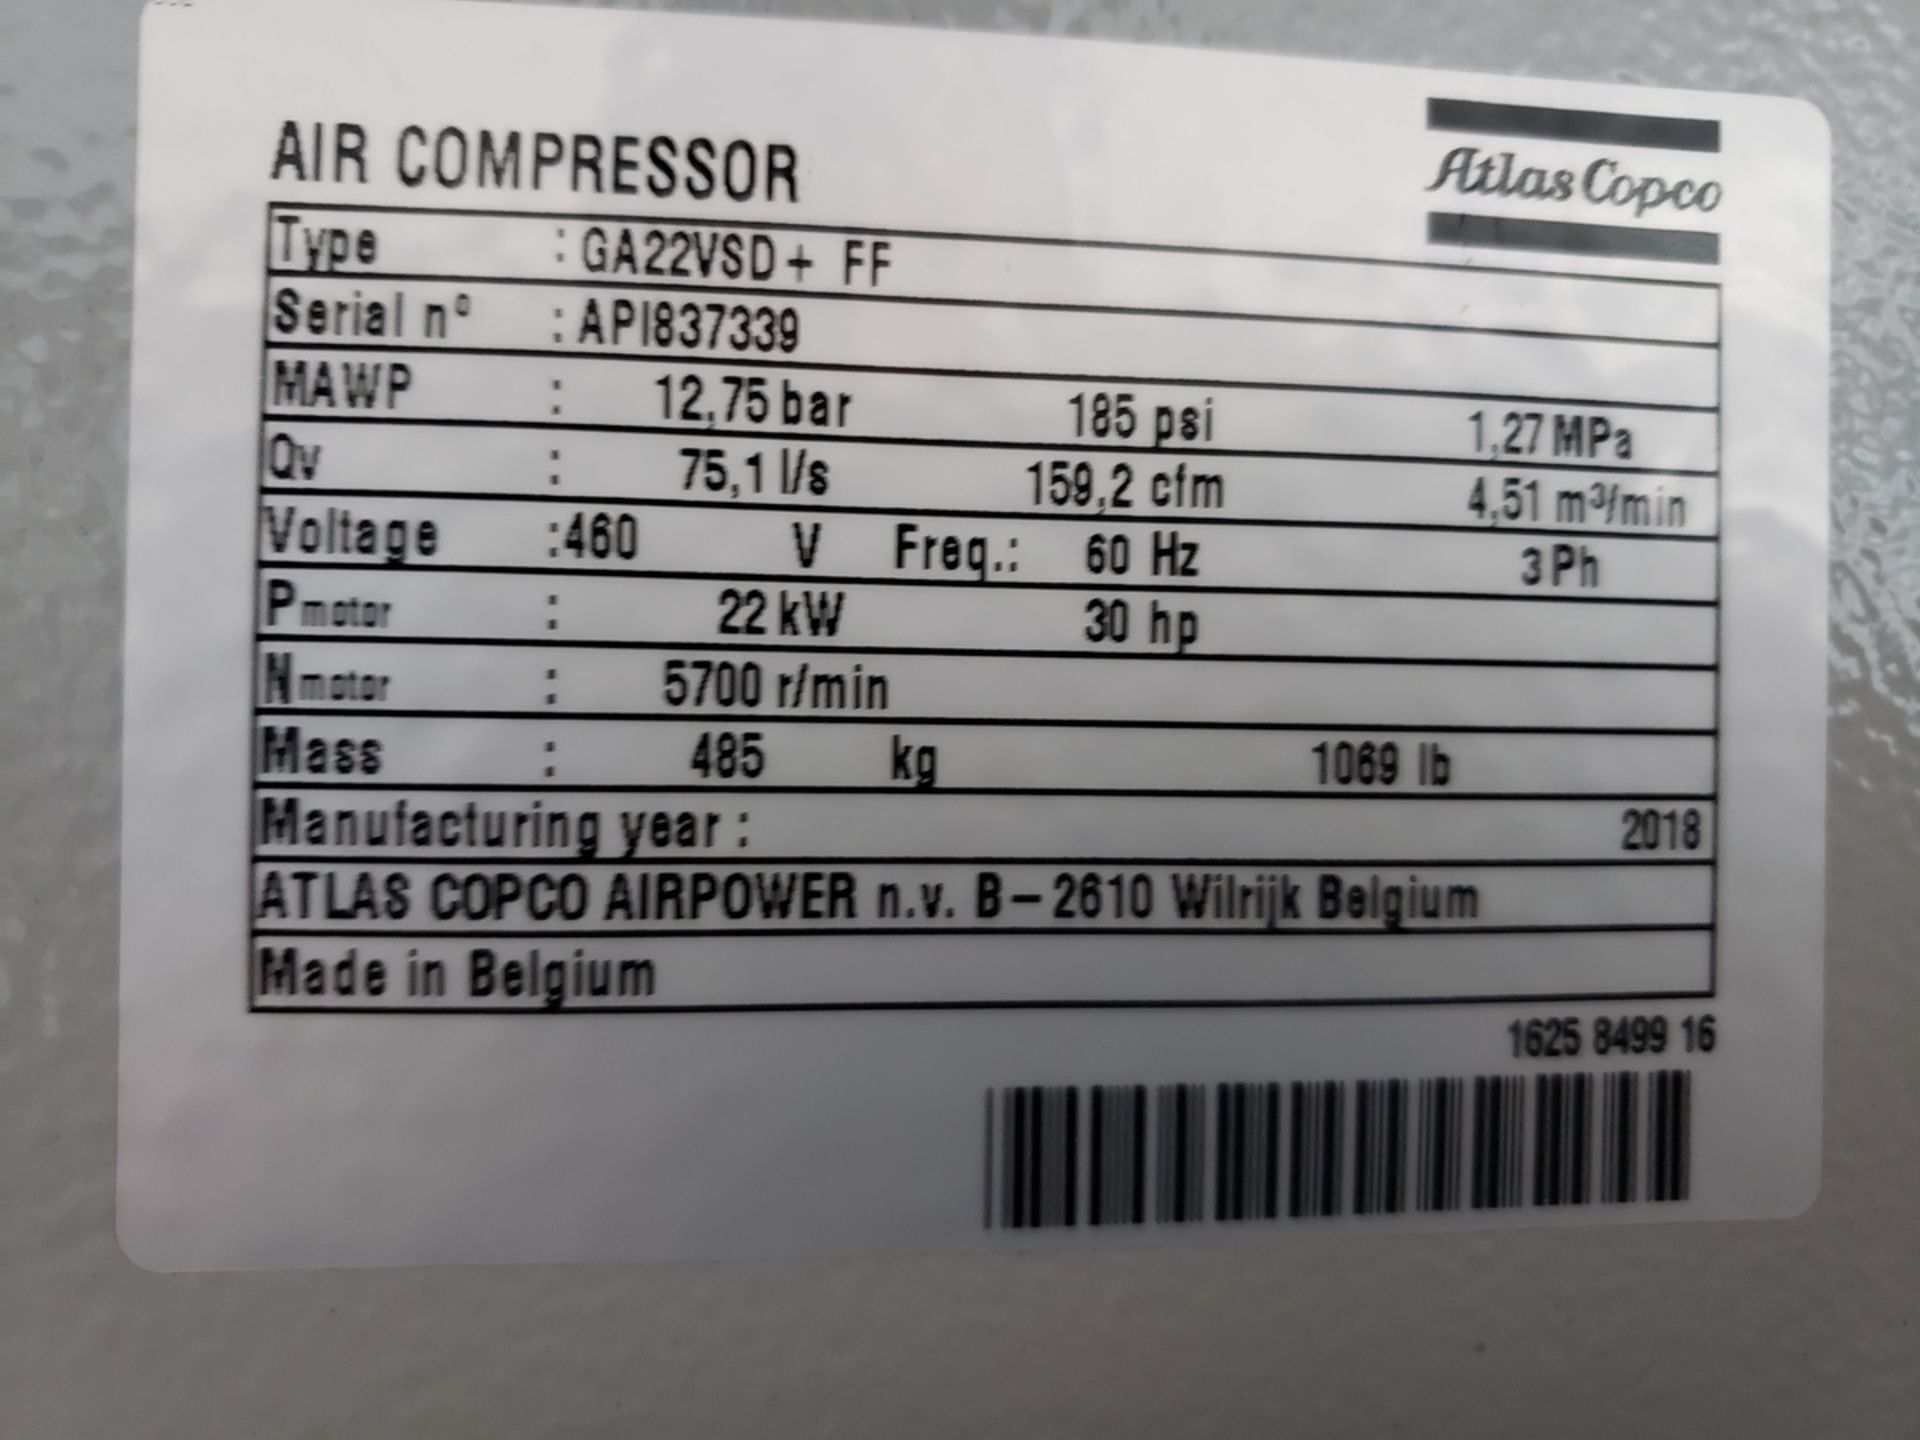 2018 Atlas Copco 30 HP Rotary Screw Air Compressor, M# GA22VSD+FF, S/N API837339 | Rig Fee $750 - Image 2 of 3